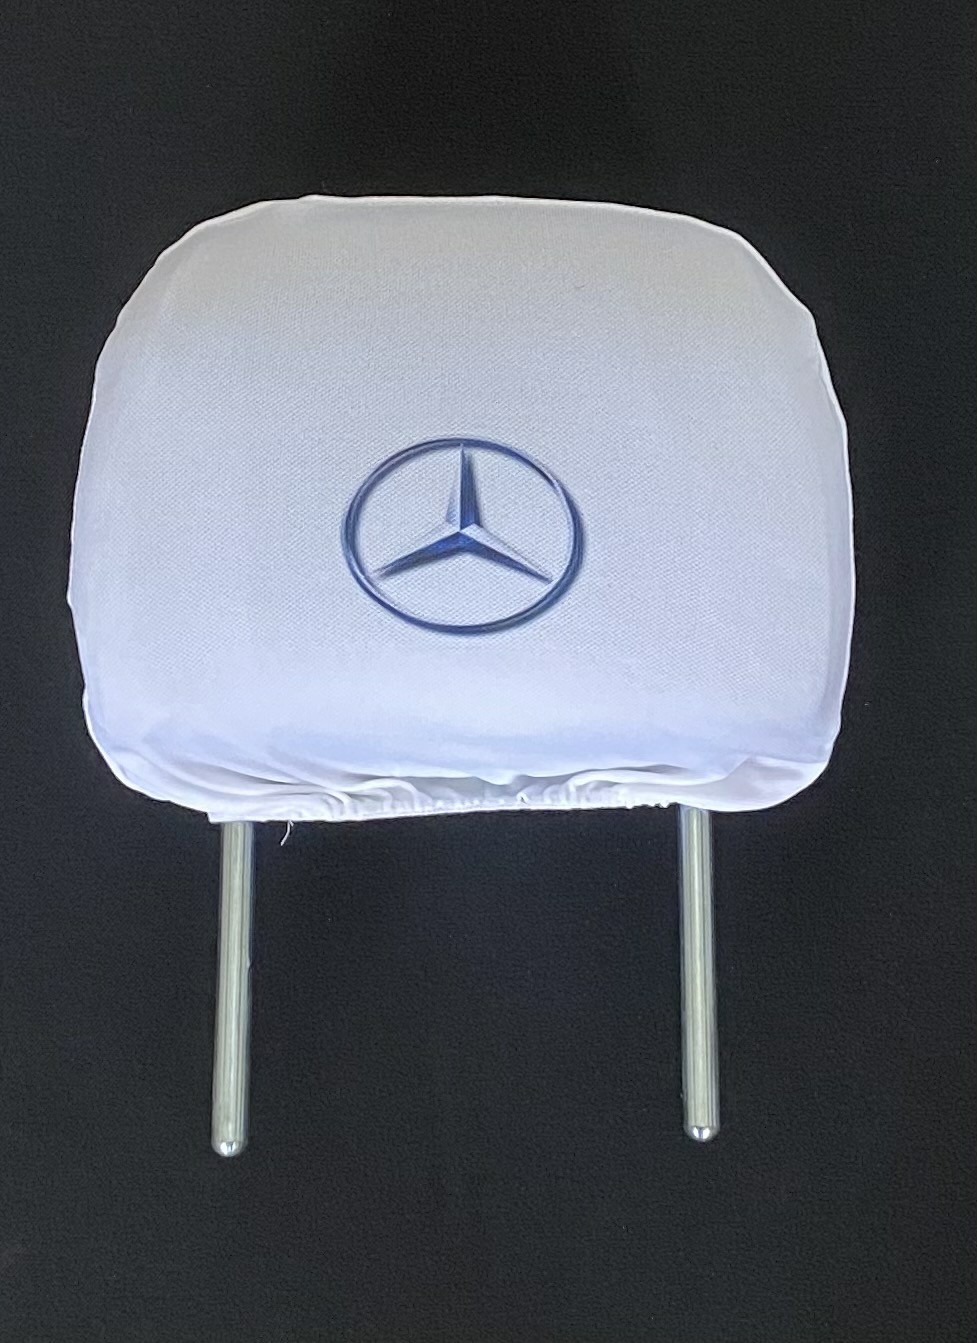 Biele návleky na opierky hlavy s logom Mercedes